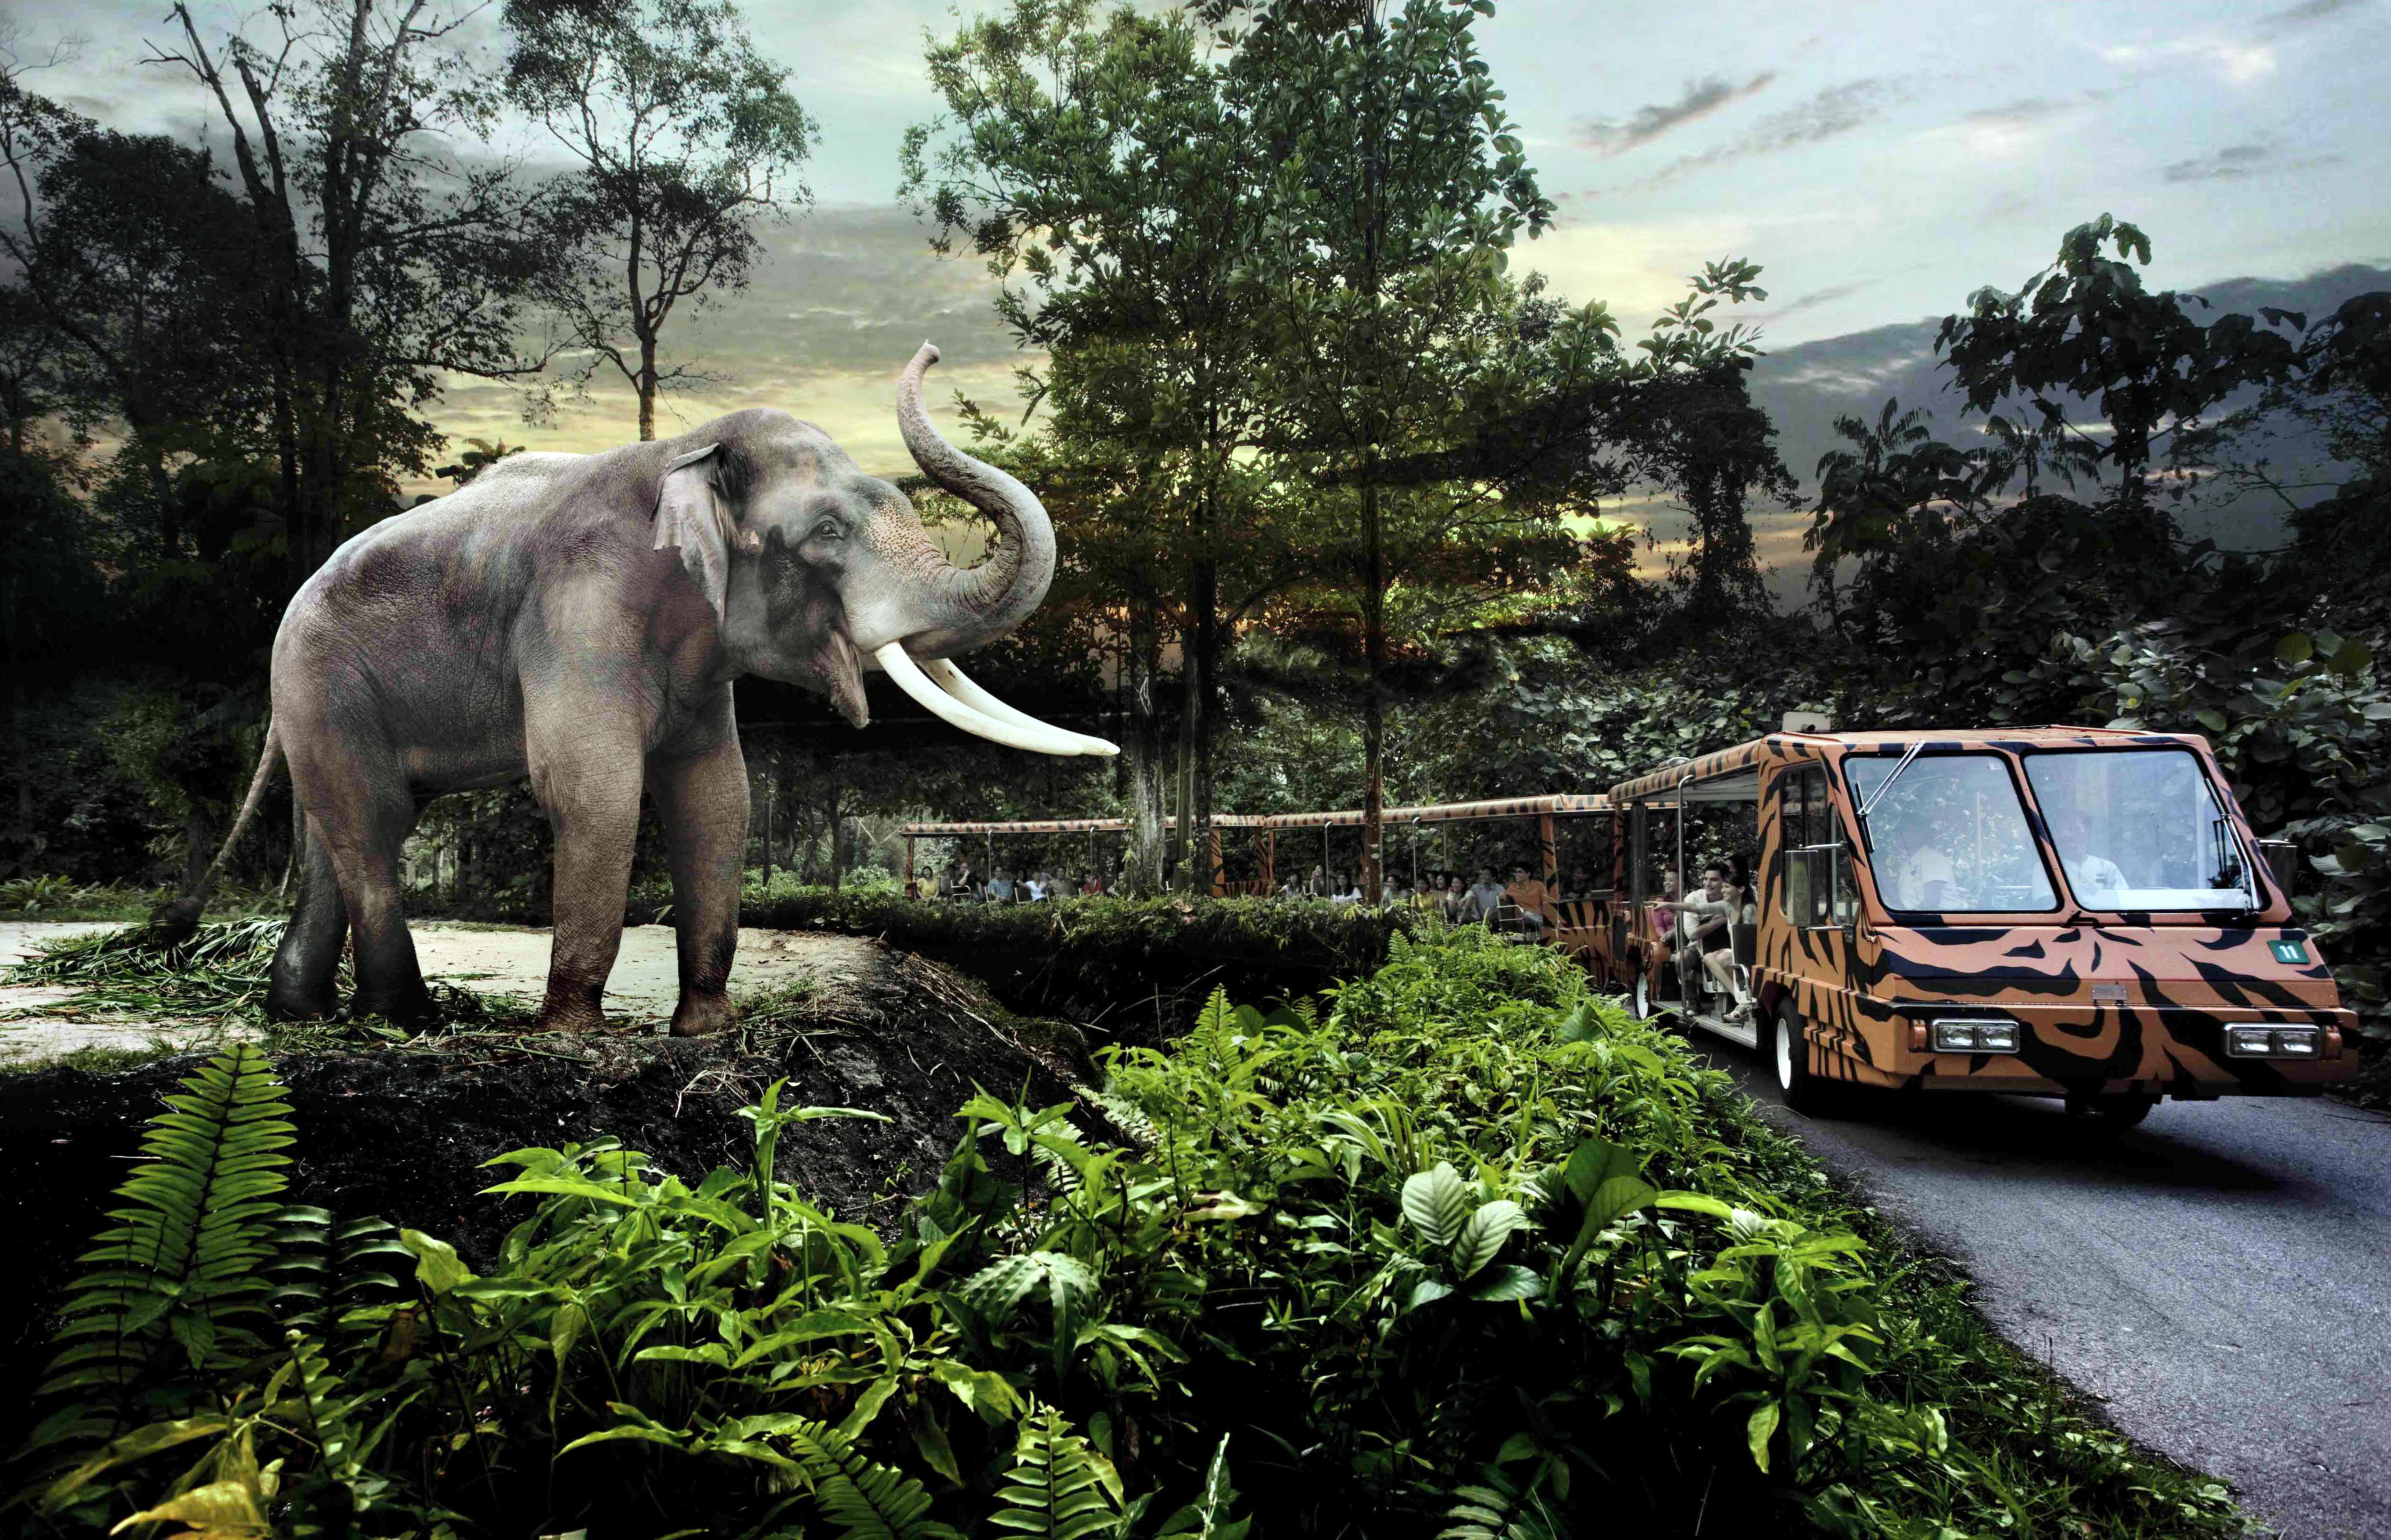 night safari and zoo package singapore